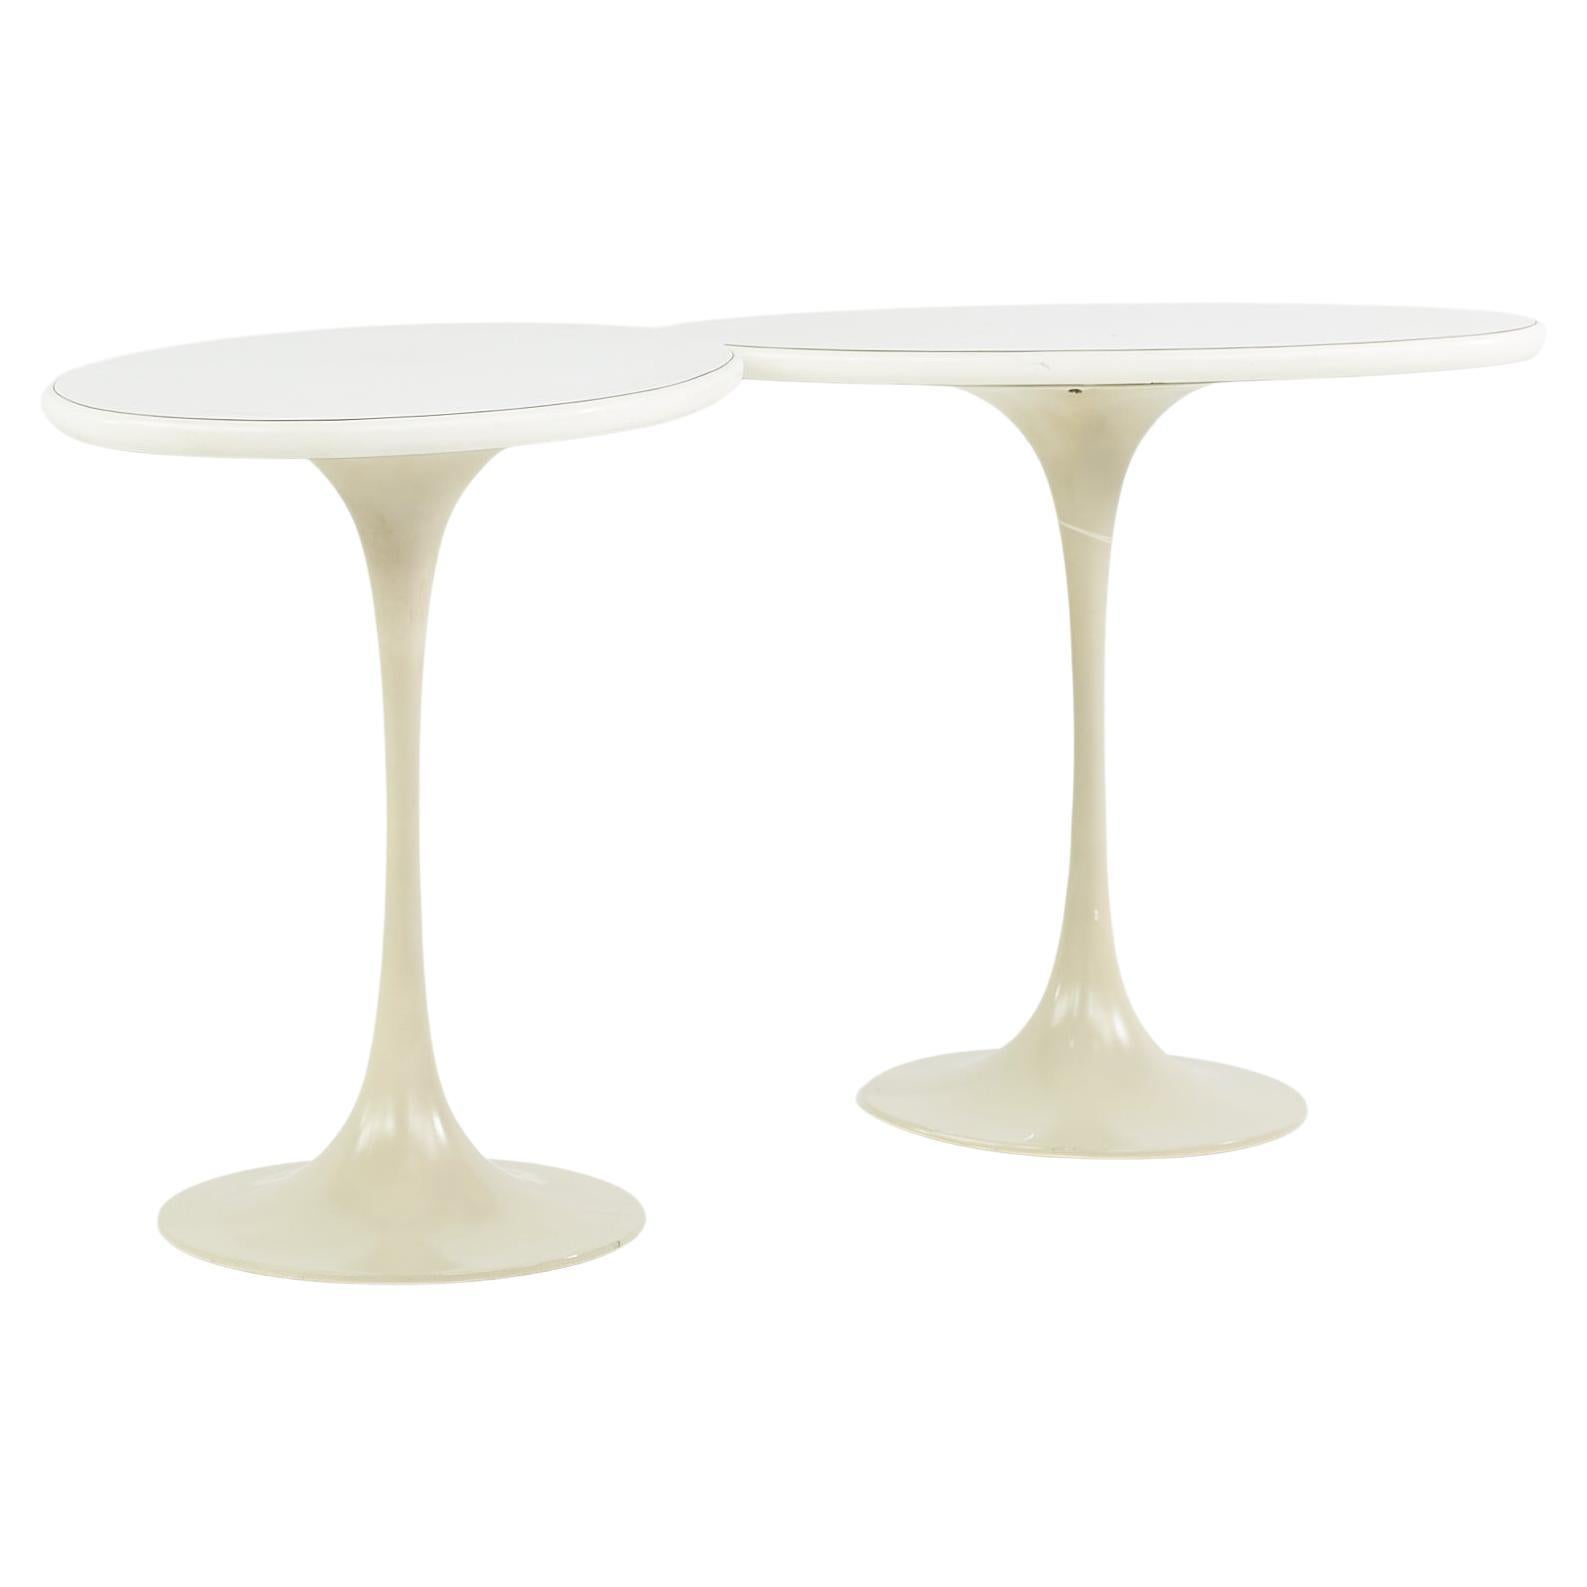 Eero Saarinen for Knoll Style Mid-Century Oval Tulip Tables, a Pair For Sale